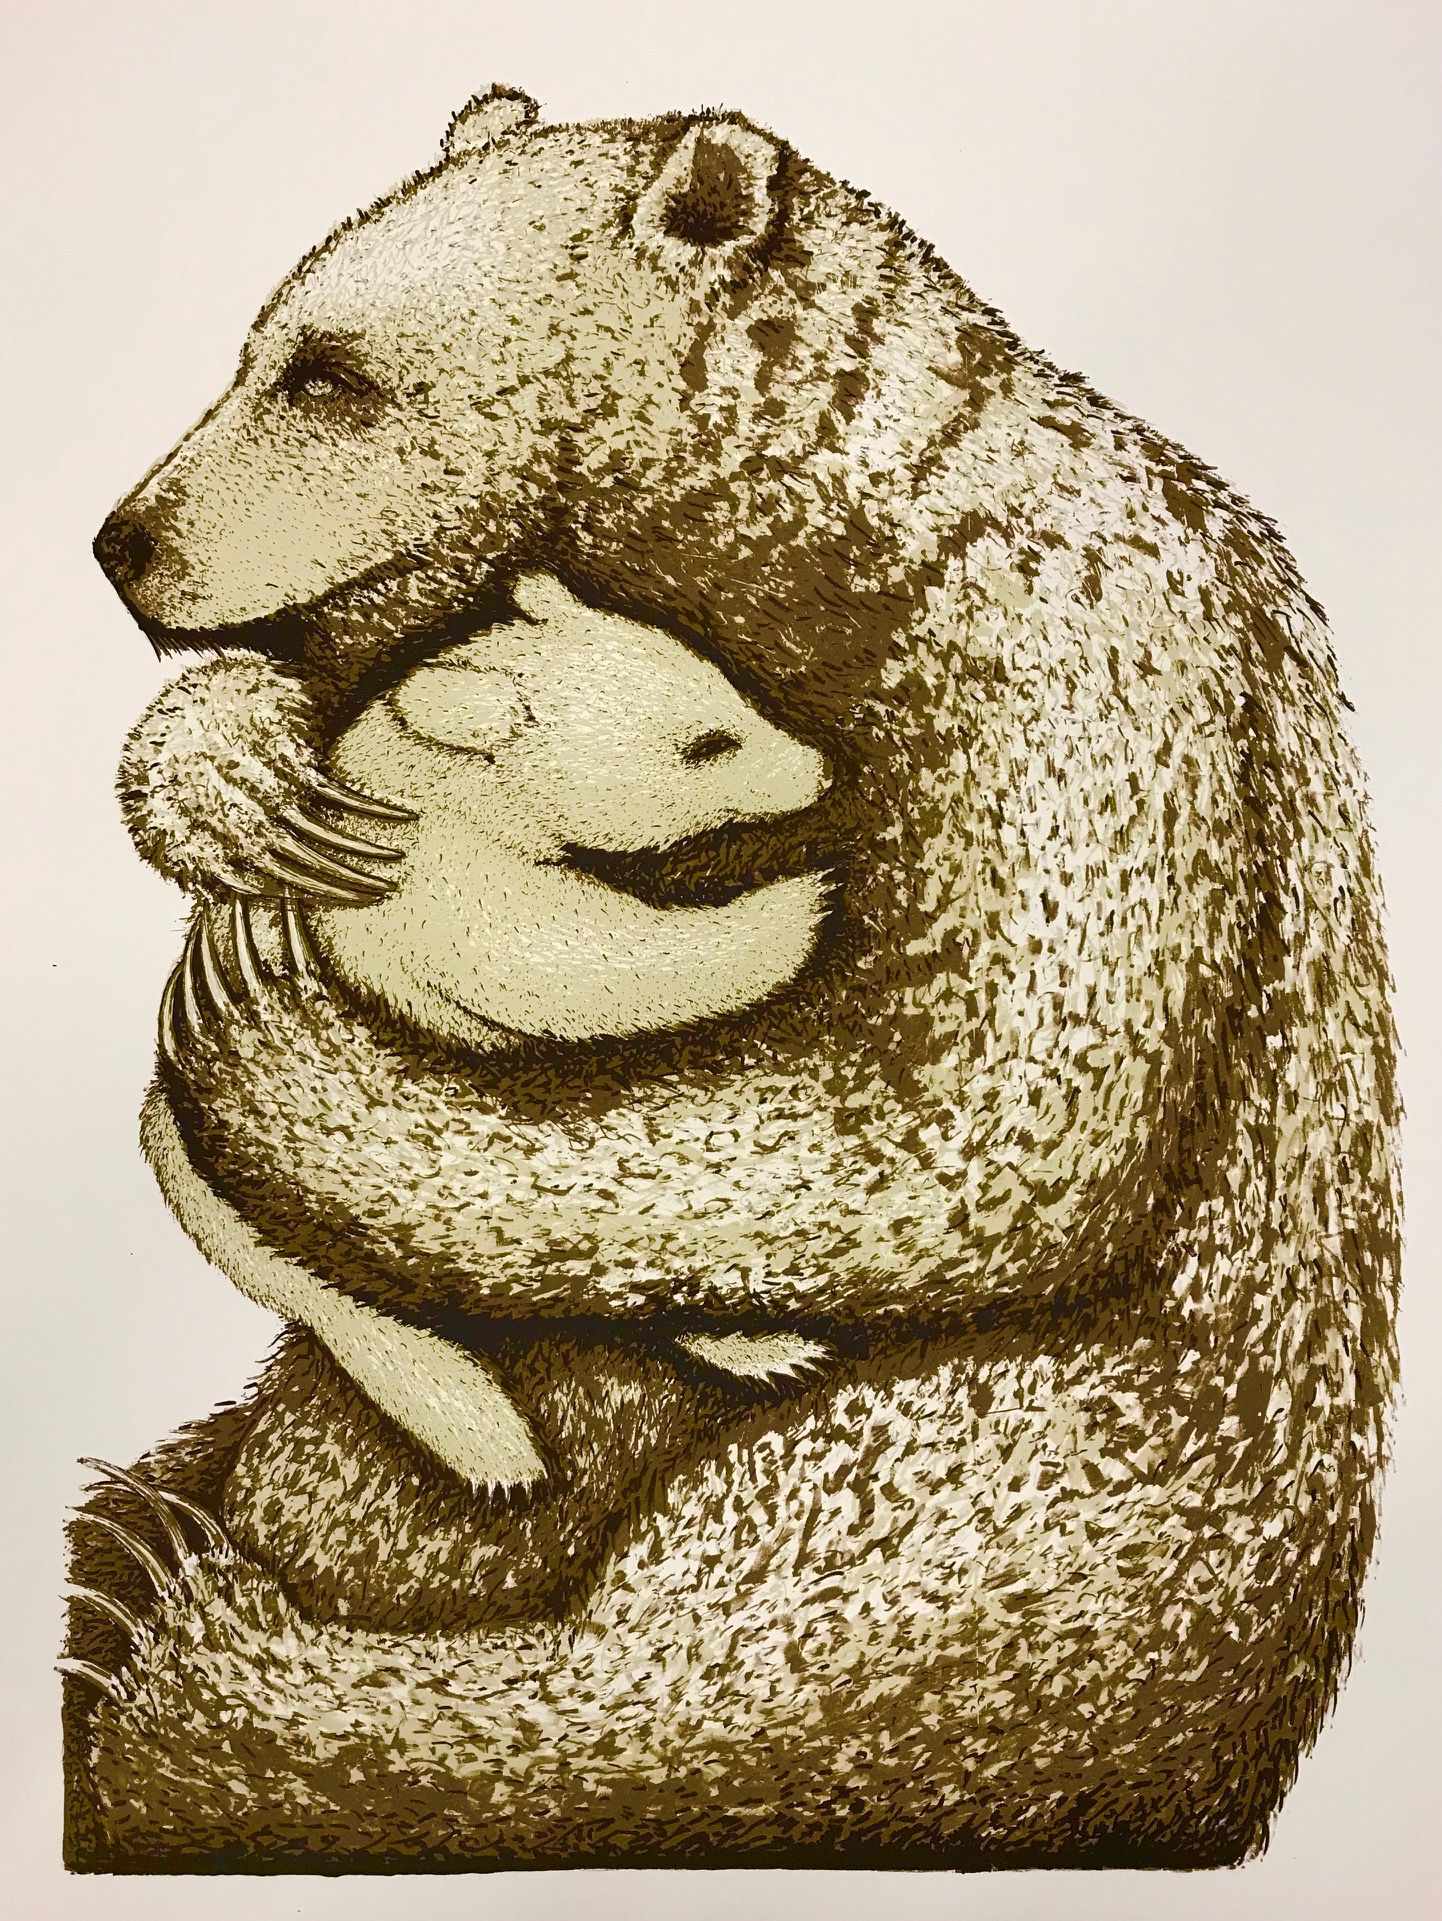 Bear Hugs (Chocolate) by Tim Southall